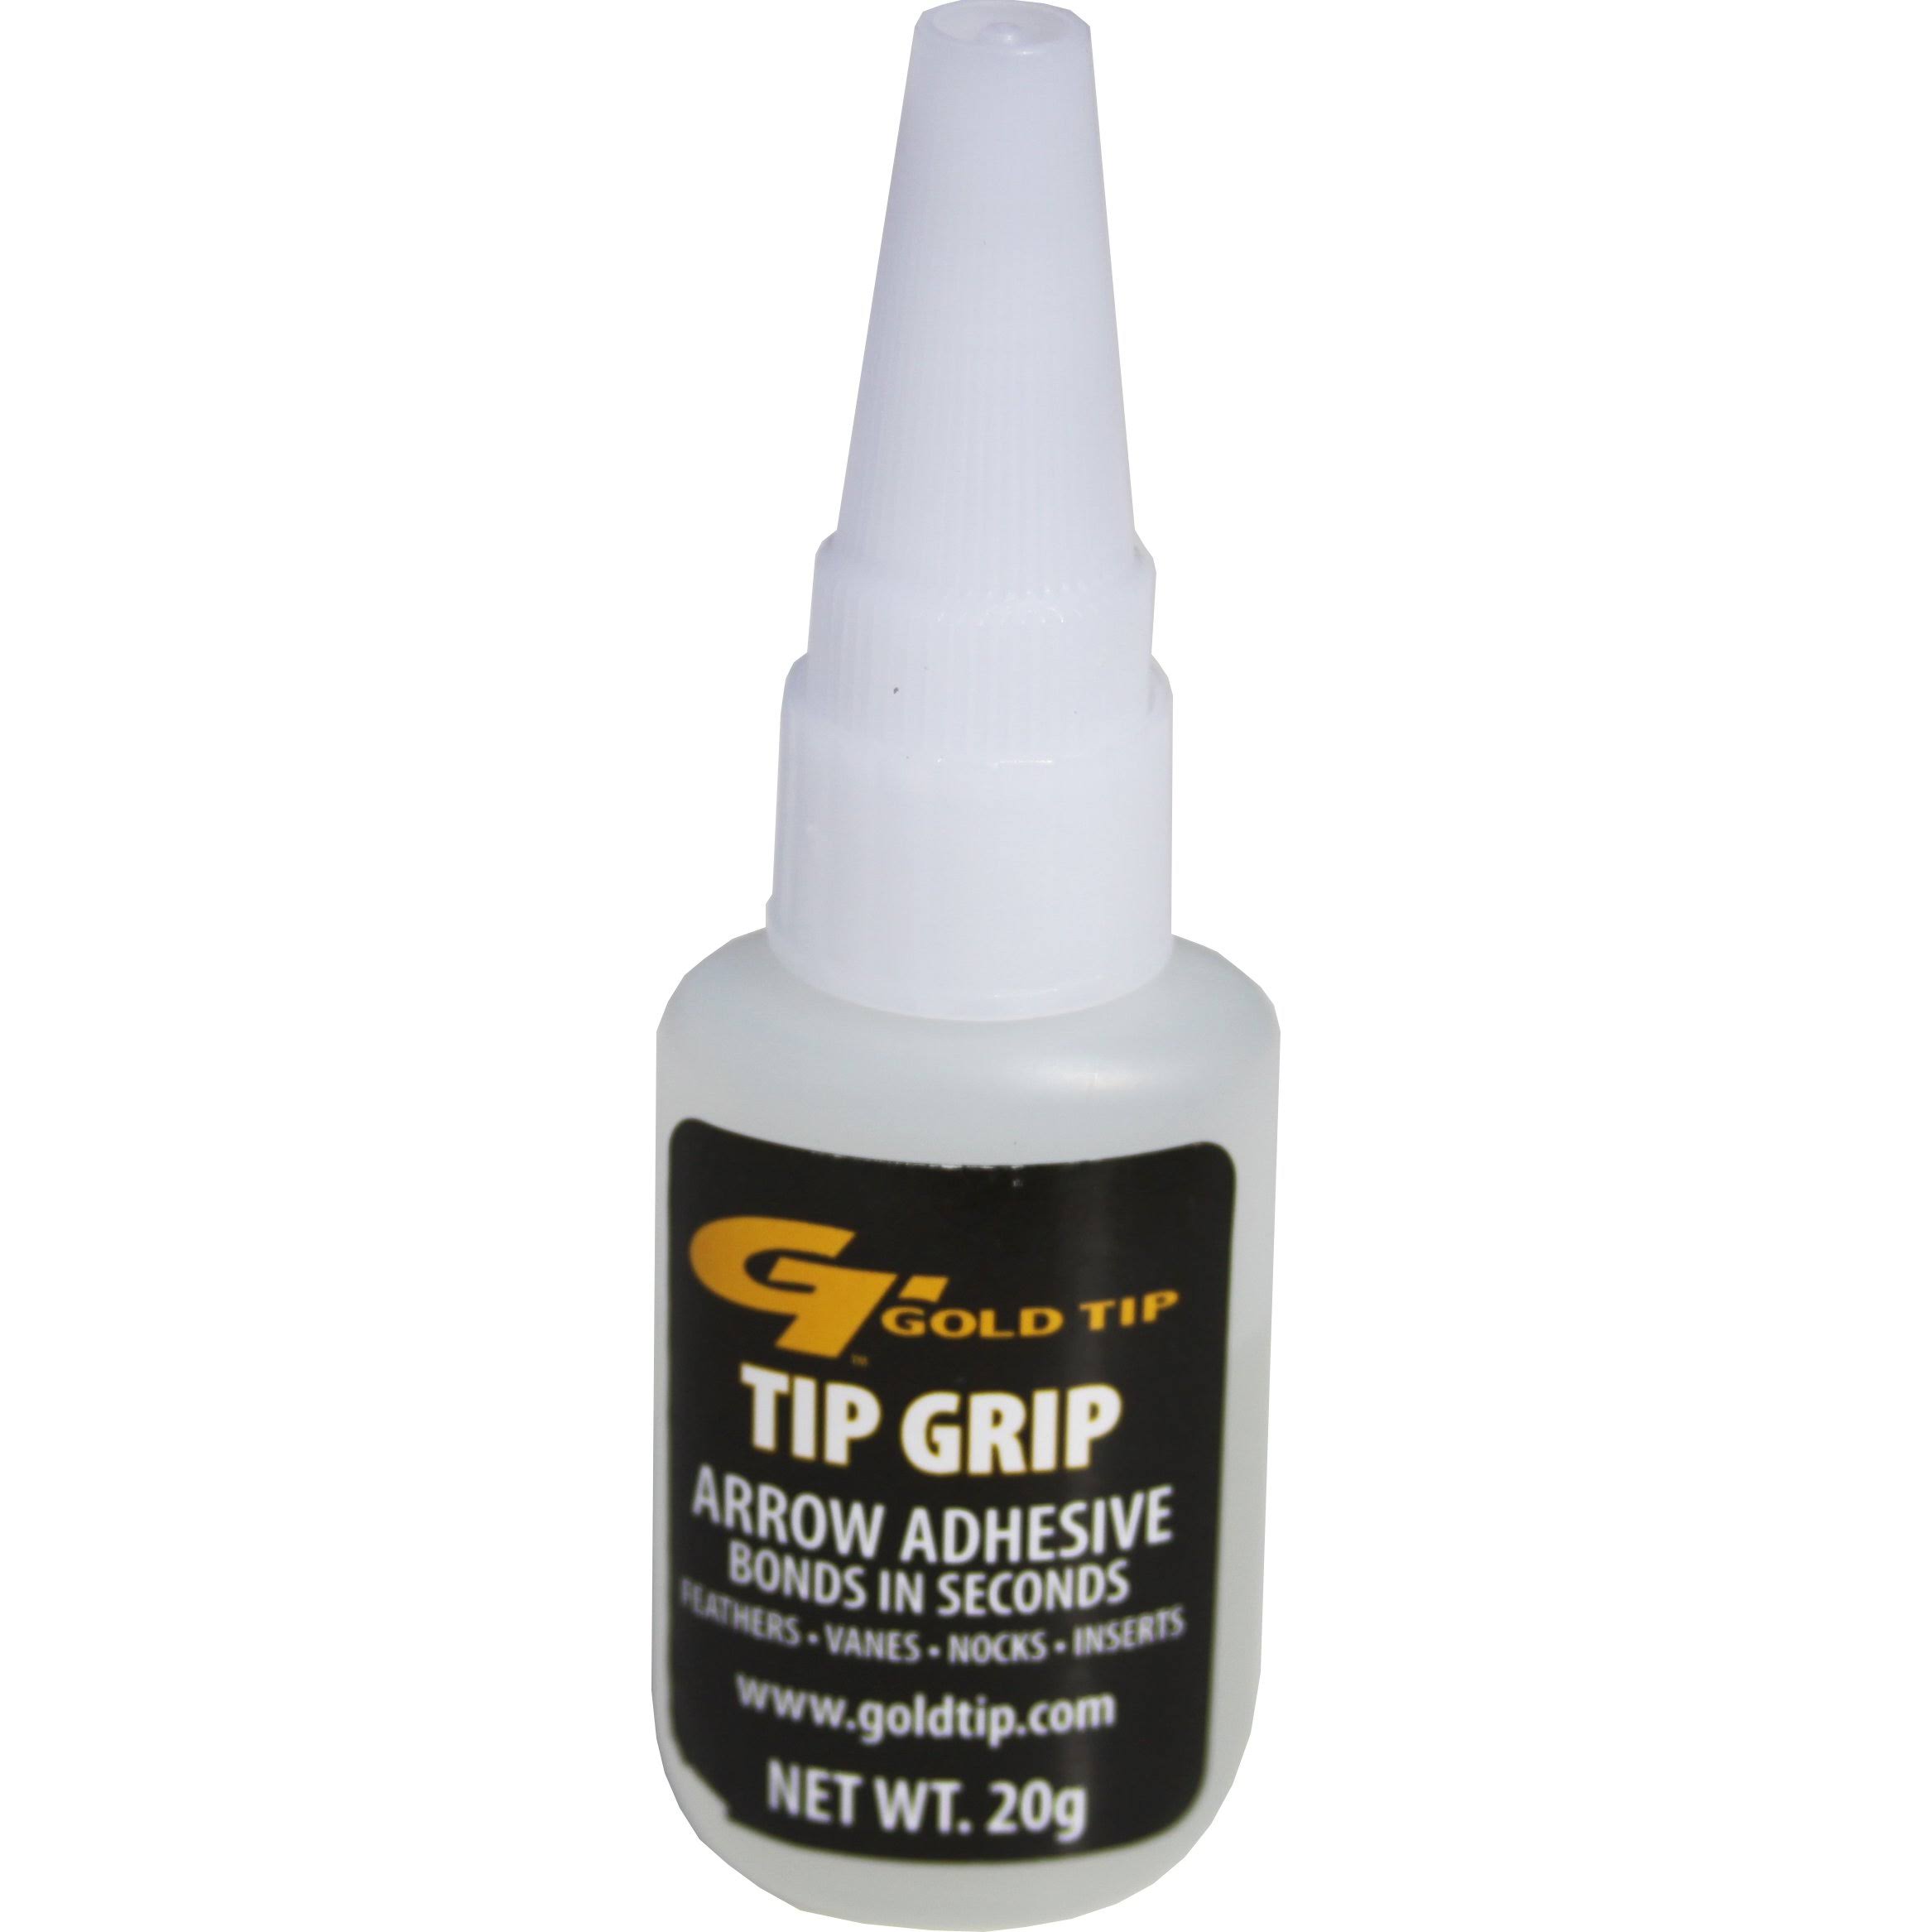 Gold Tip Tip Grip Arrow Adhesive Glue - 20g